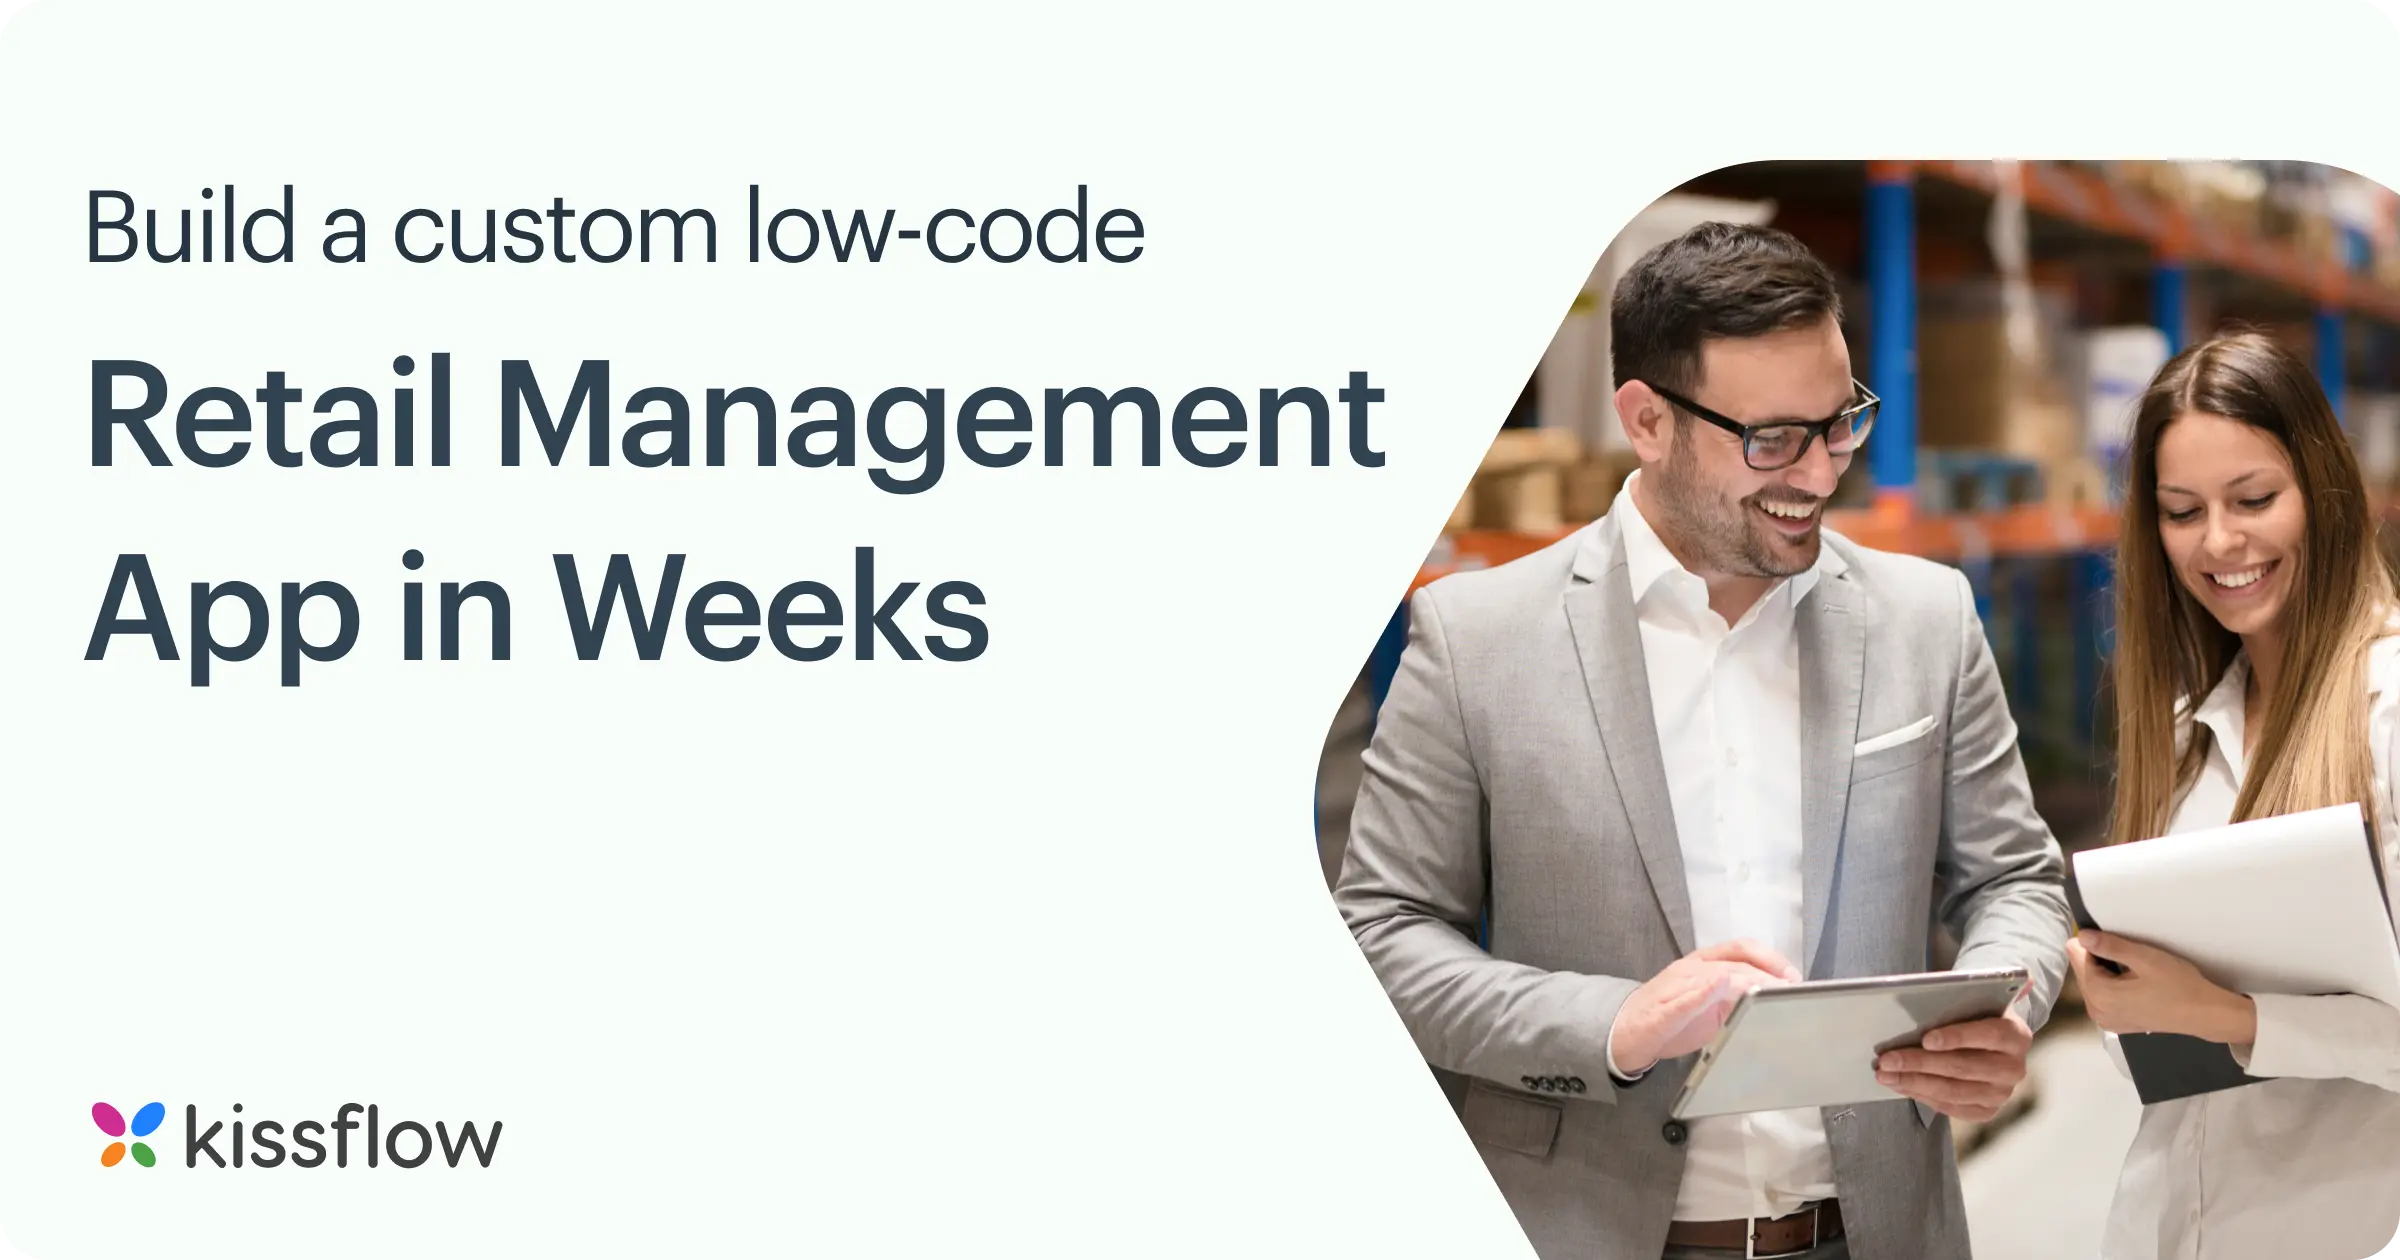 Build a custom low-code retail management app in weeks